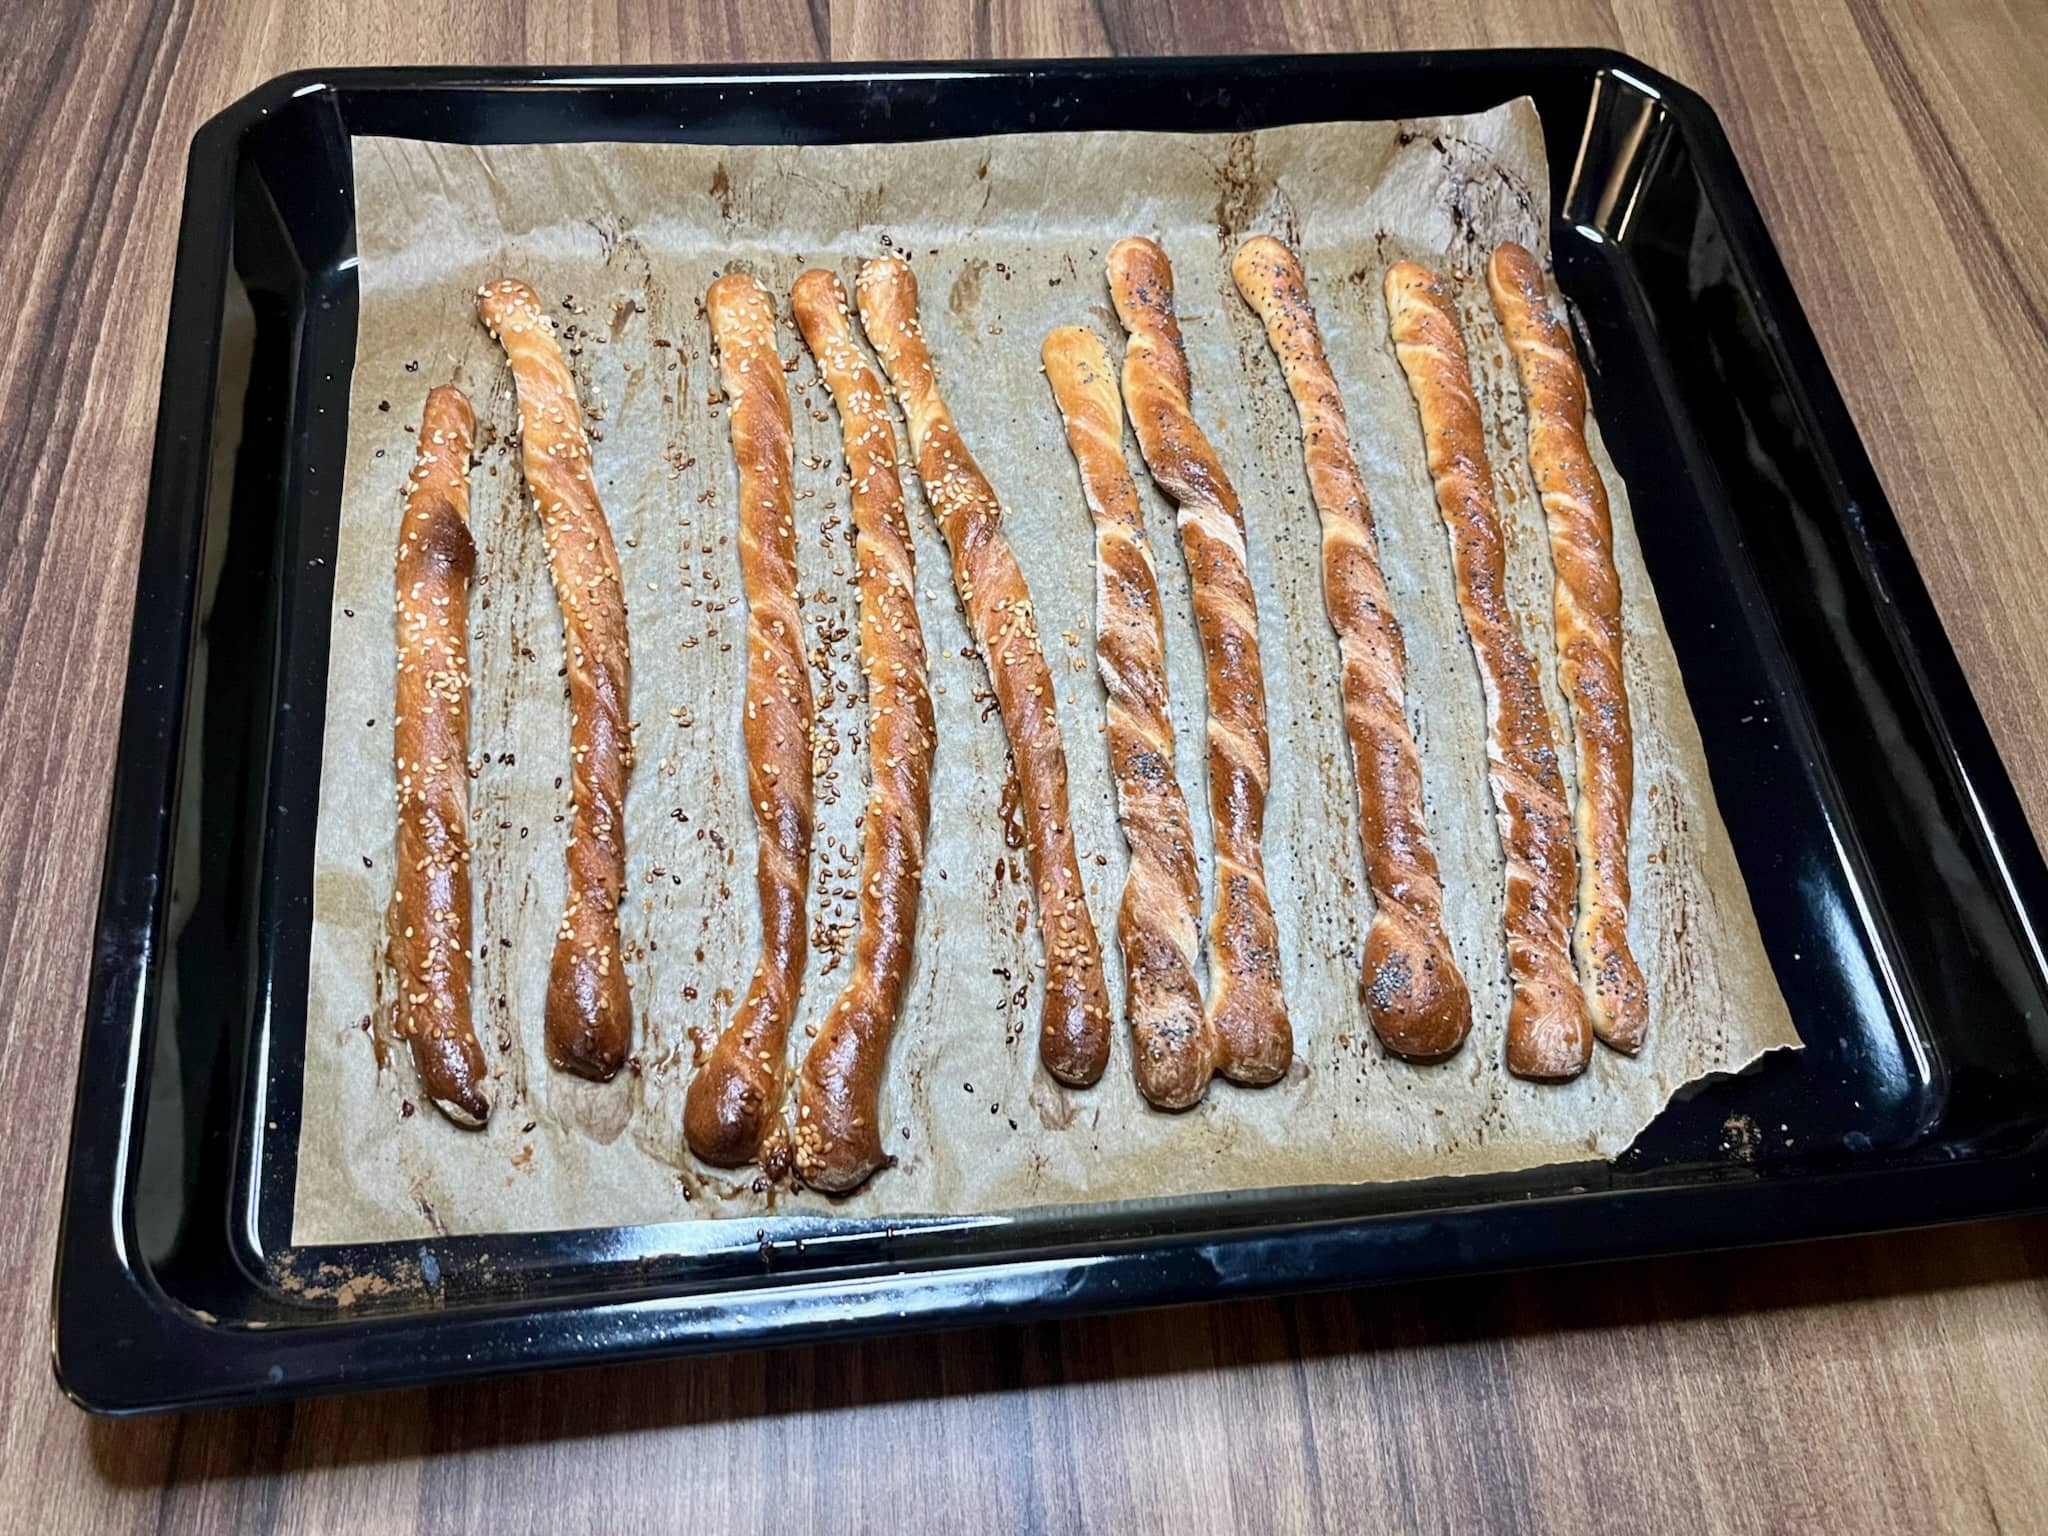 Nicely baked breadsticks still on a baking tray